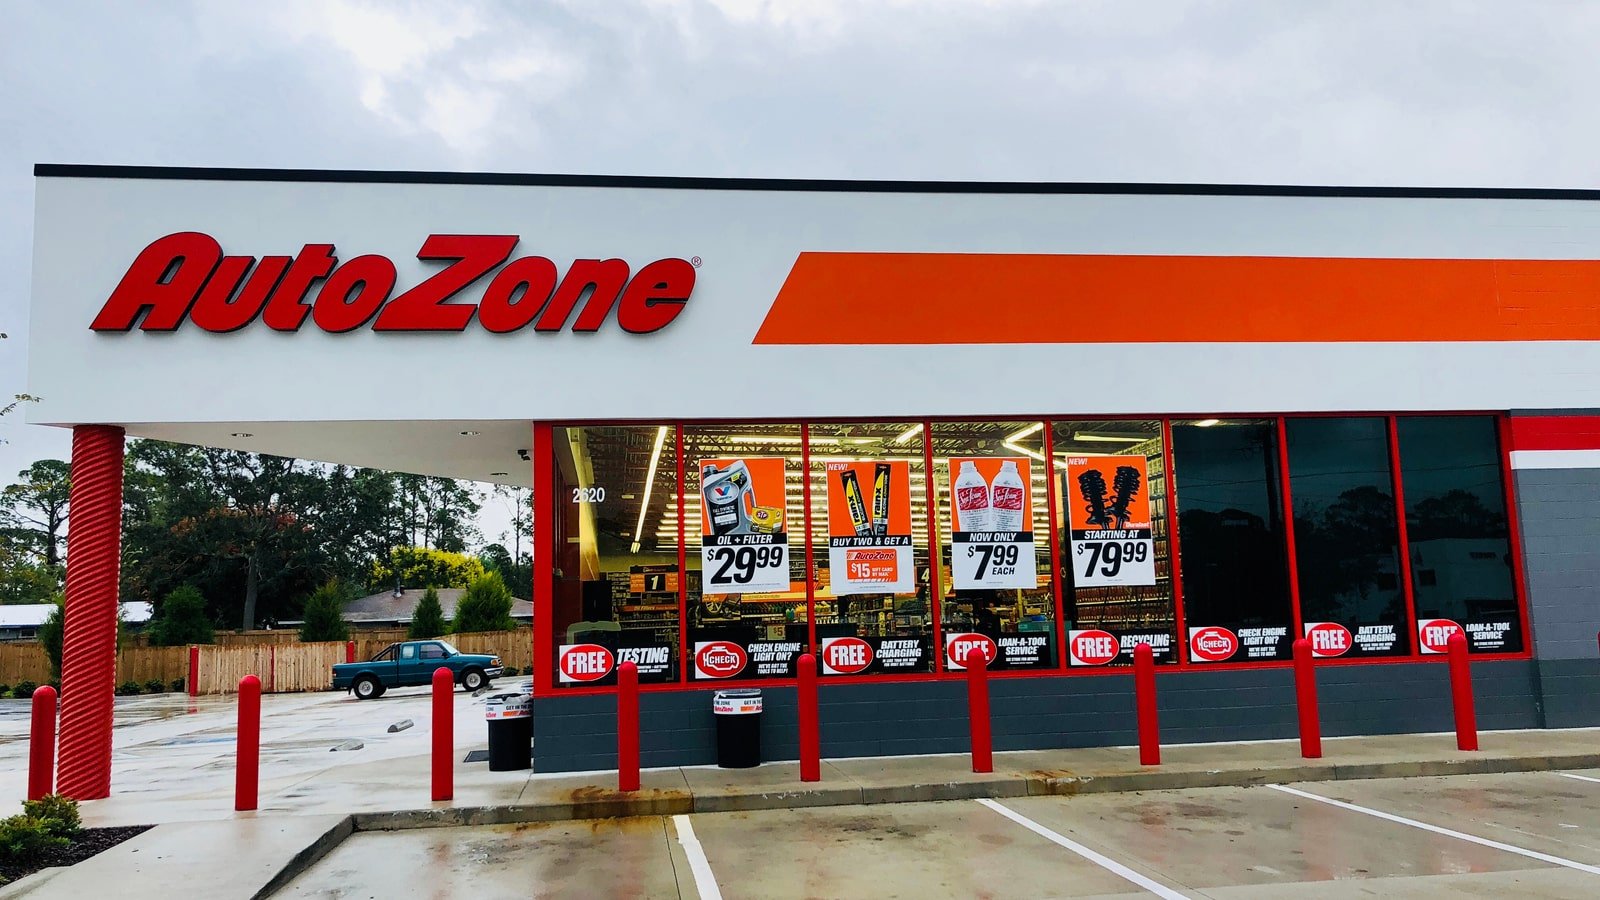 An AutoZone (AZO Stock) storefront in Saint Augustine, Florida.